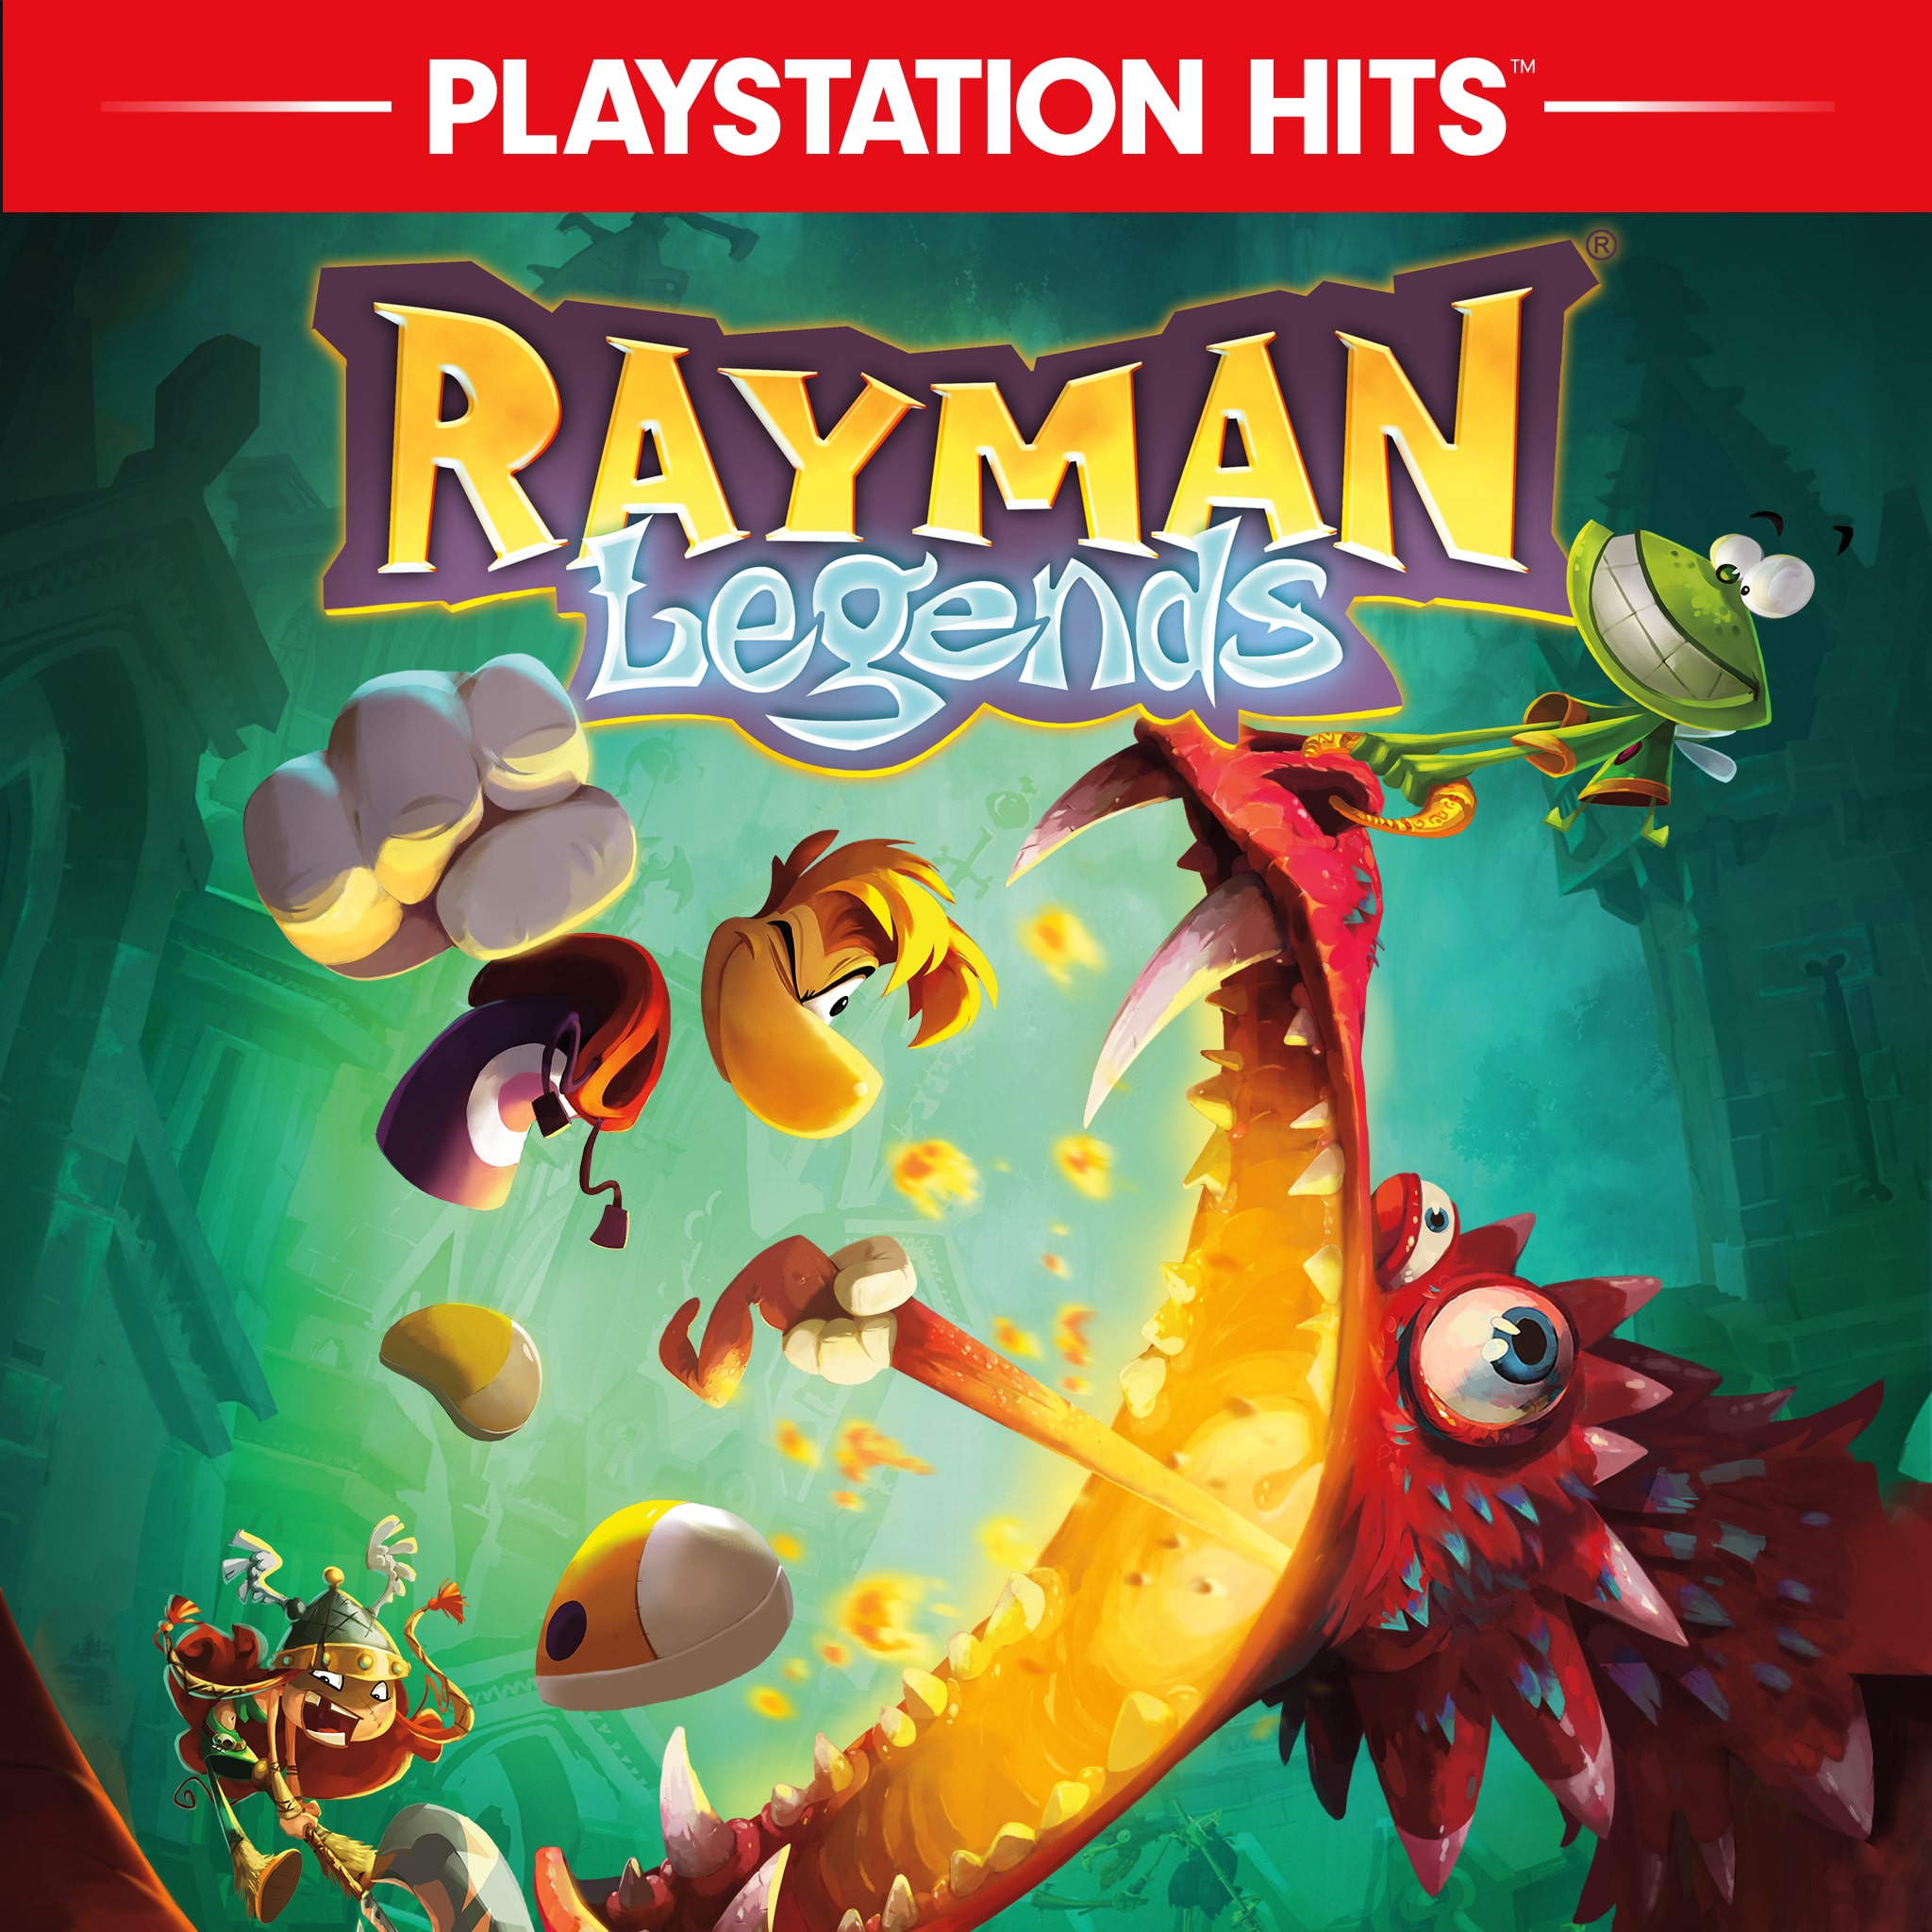 Rayman® Legends